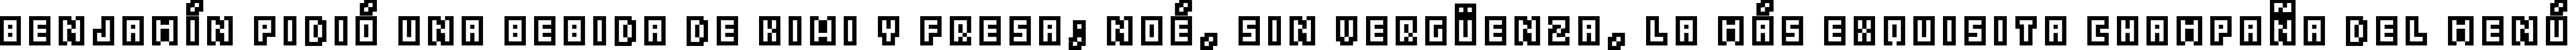 Пример написания шрифтом Grixel Acme 5 CompCapsO Xtnd текста на испанском